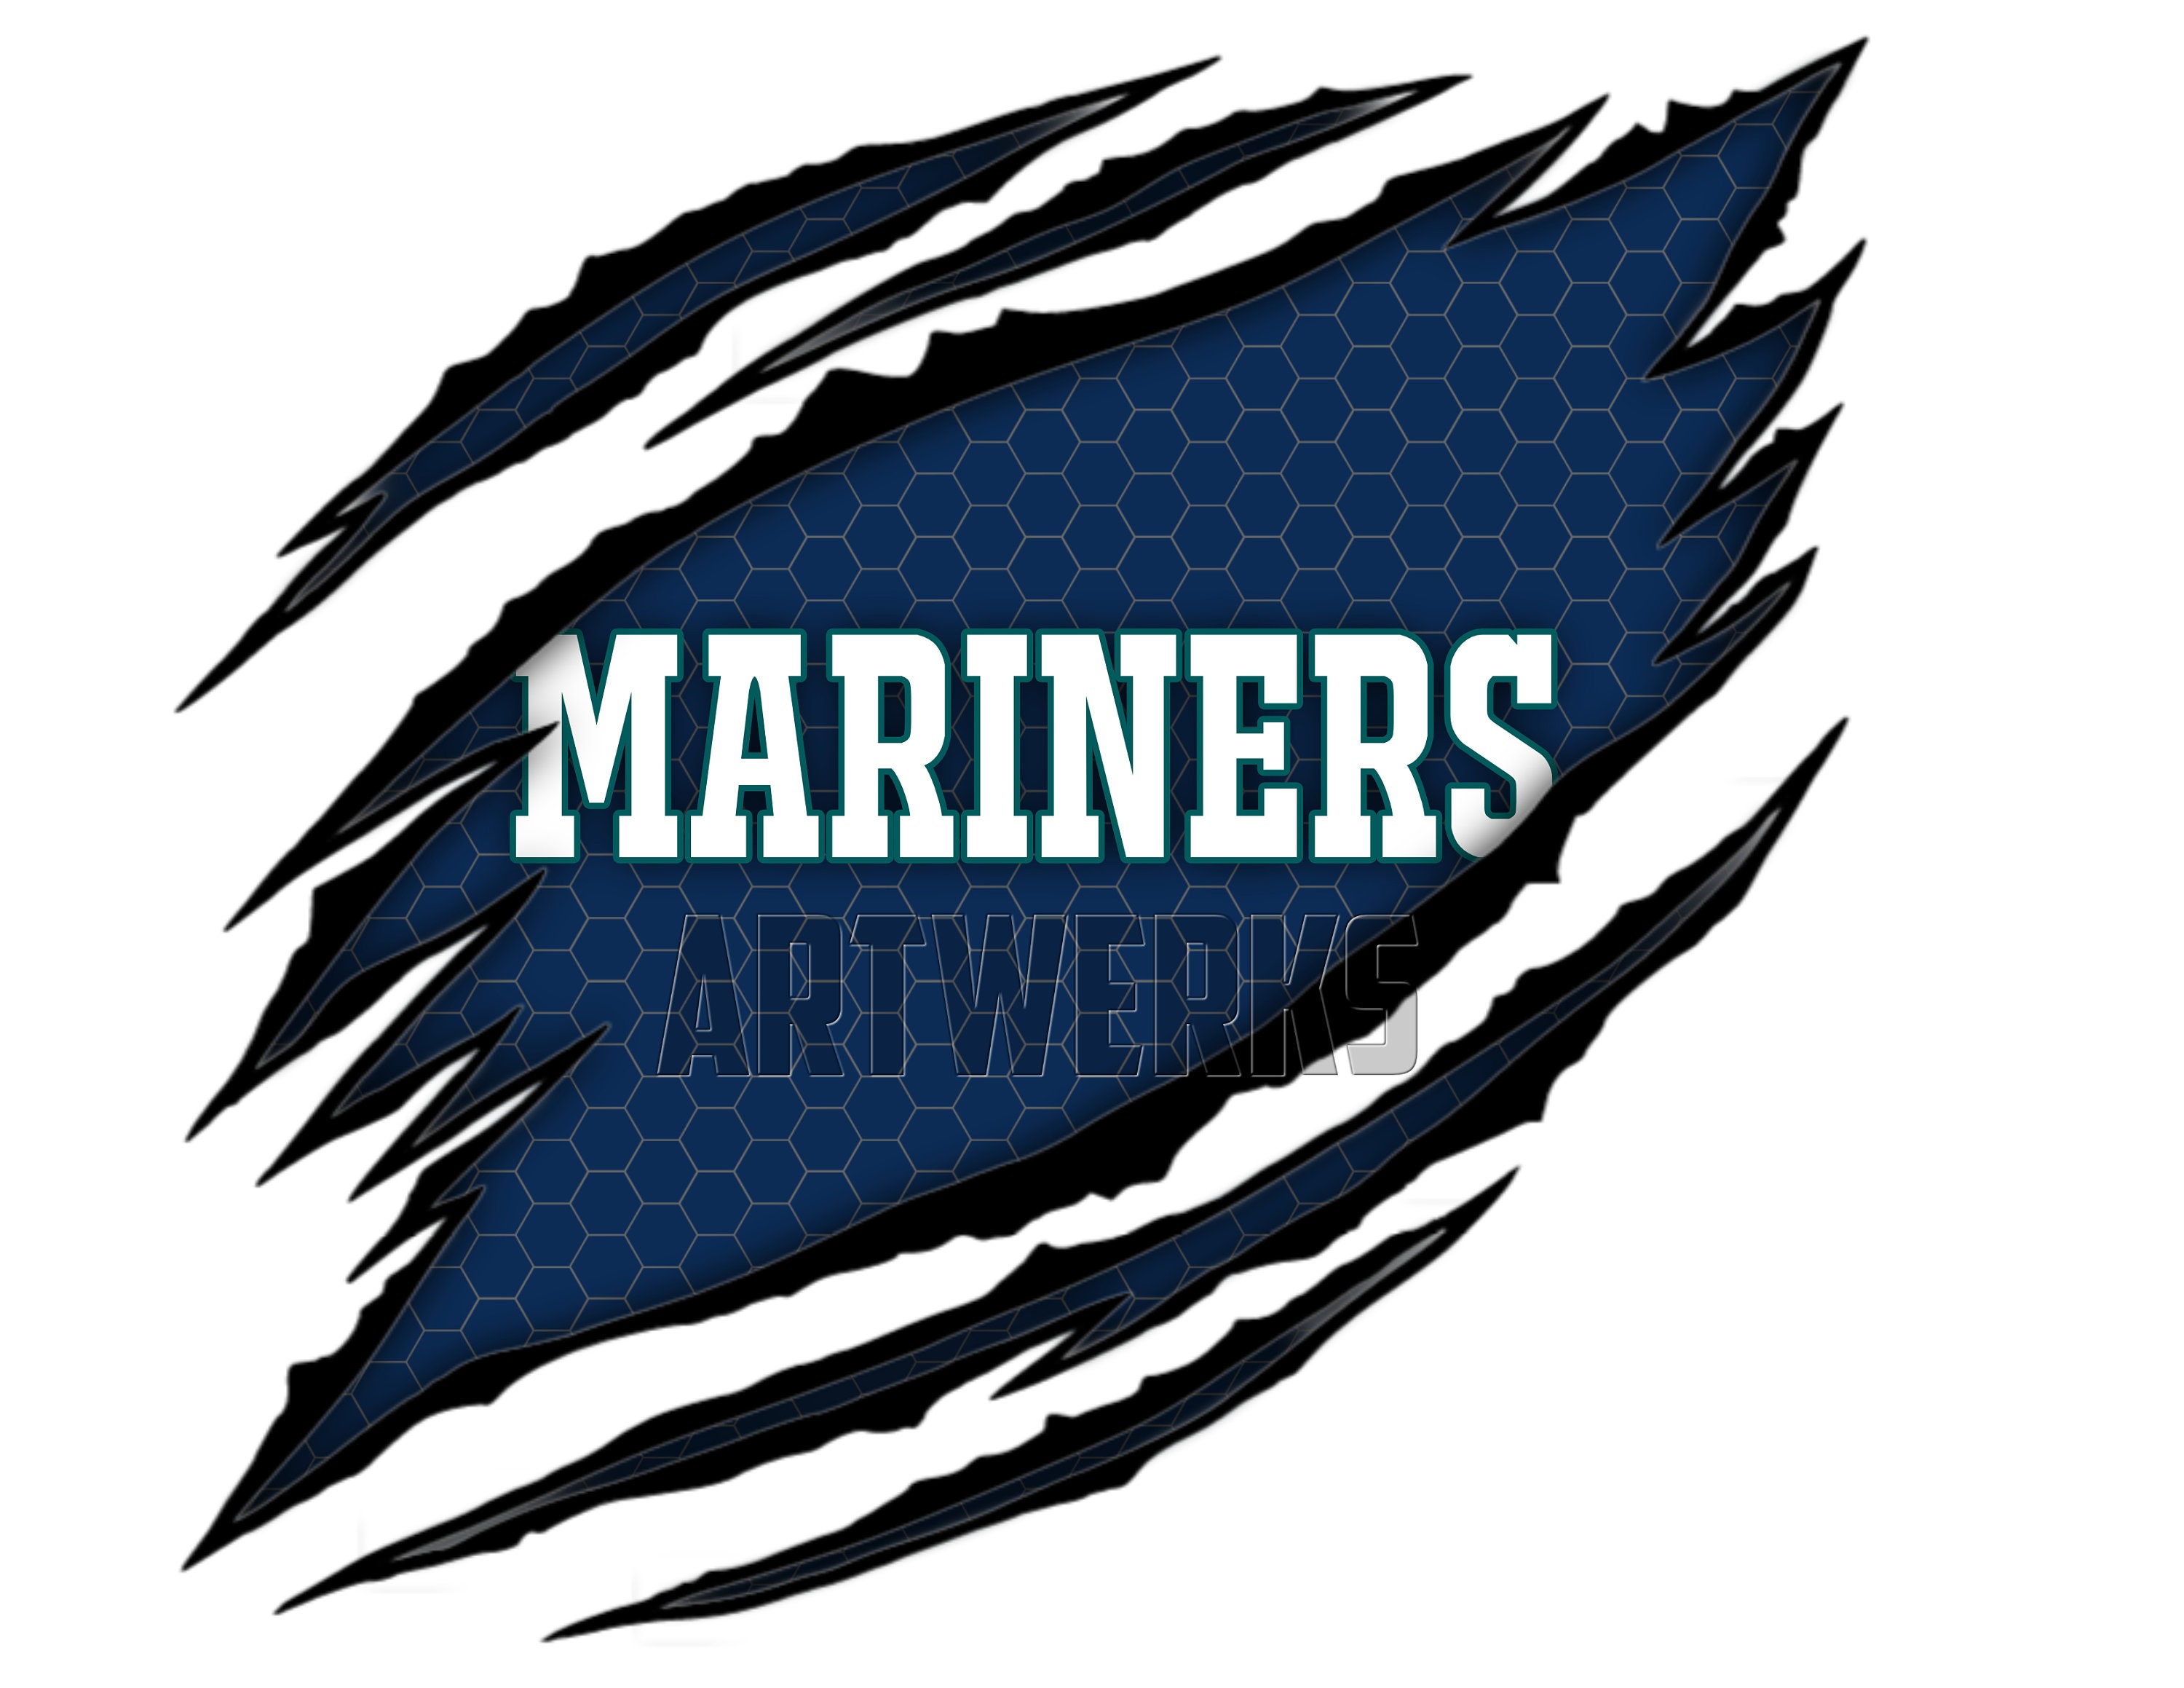 seattle mariners logo font